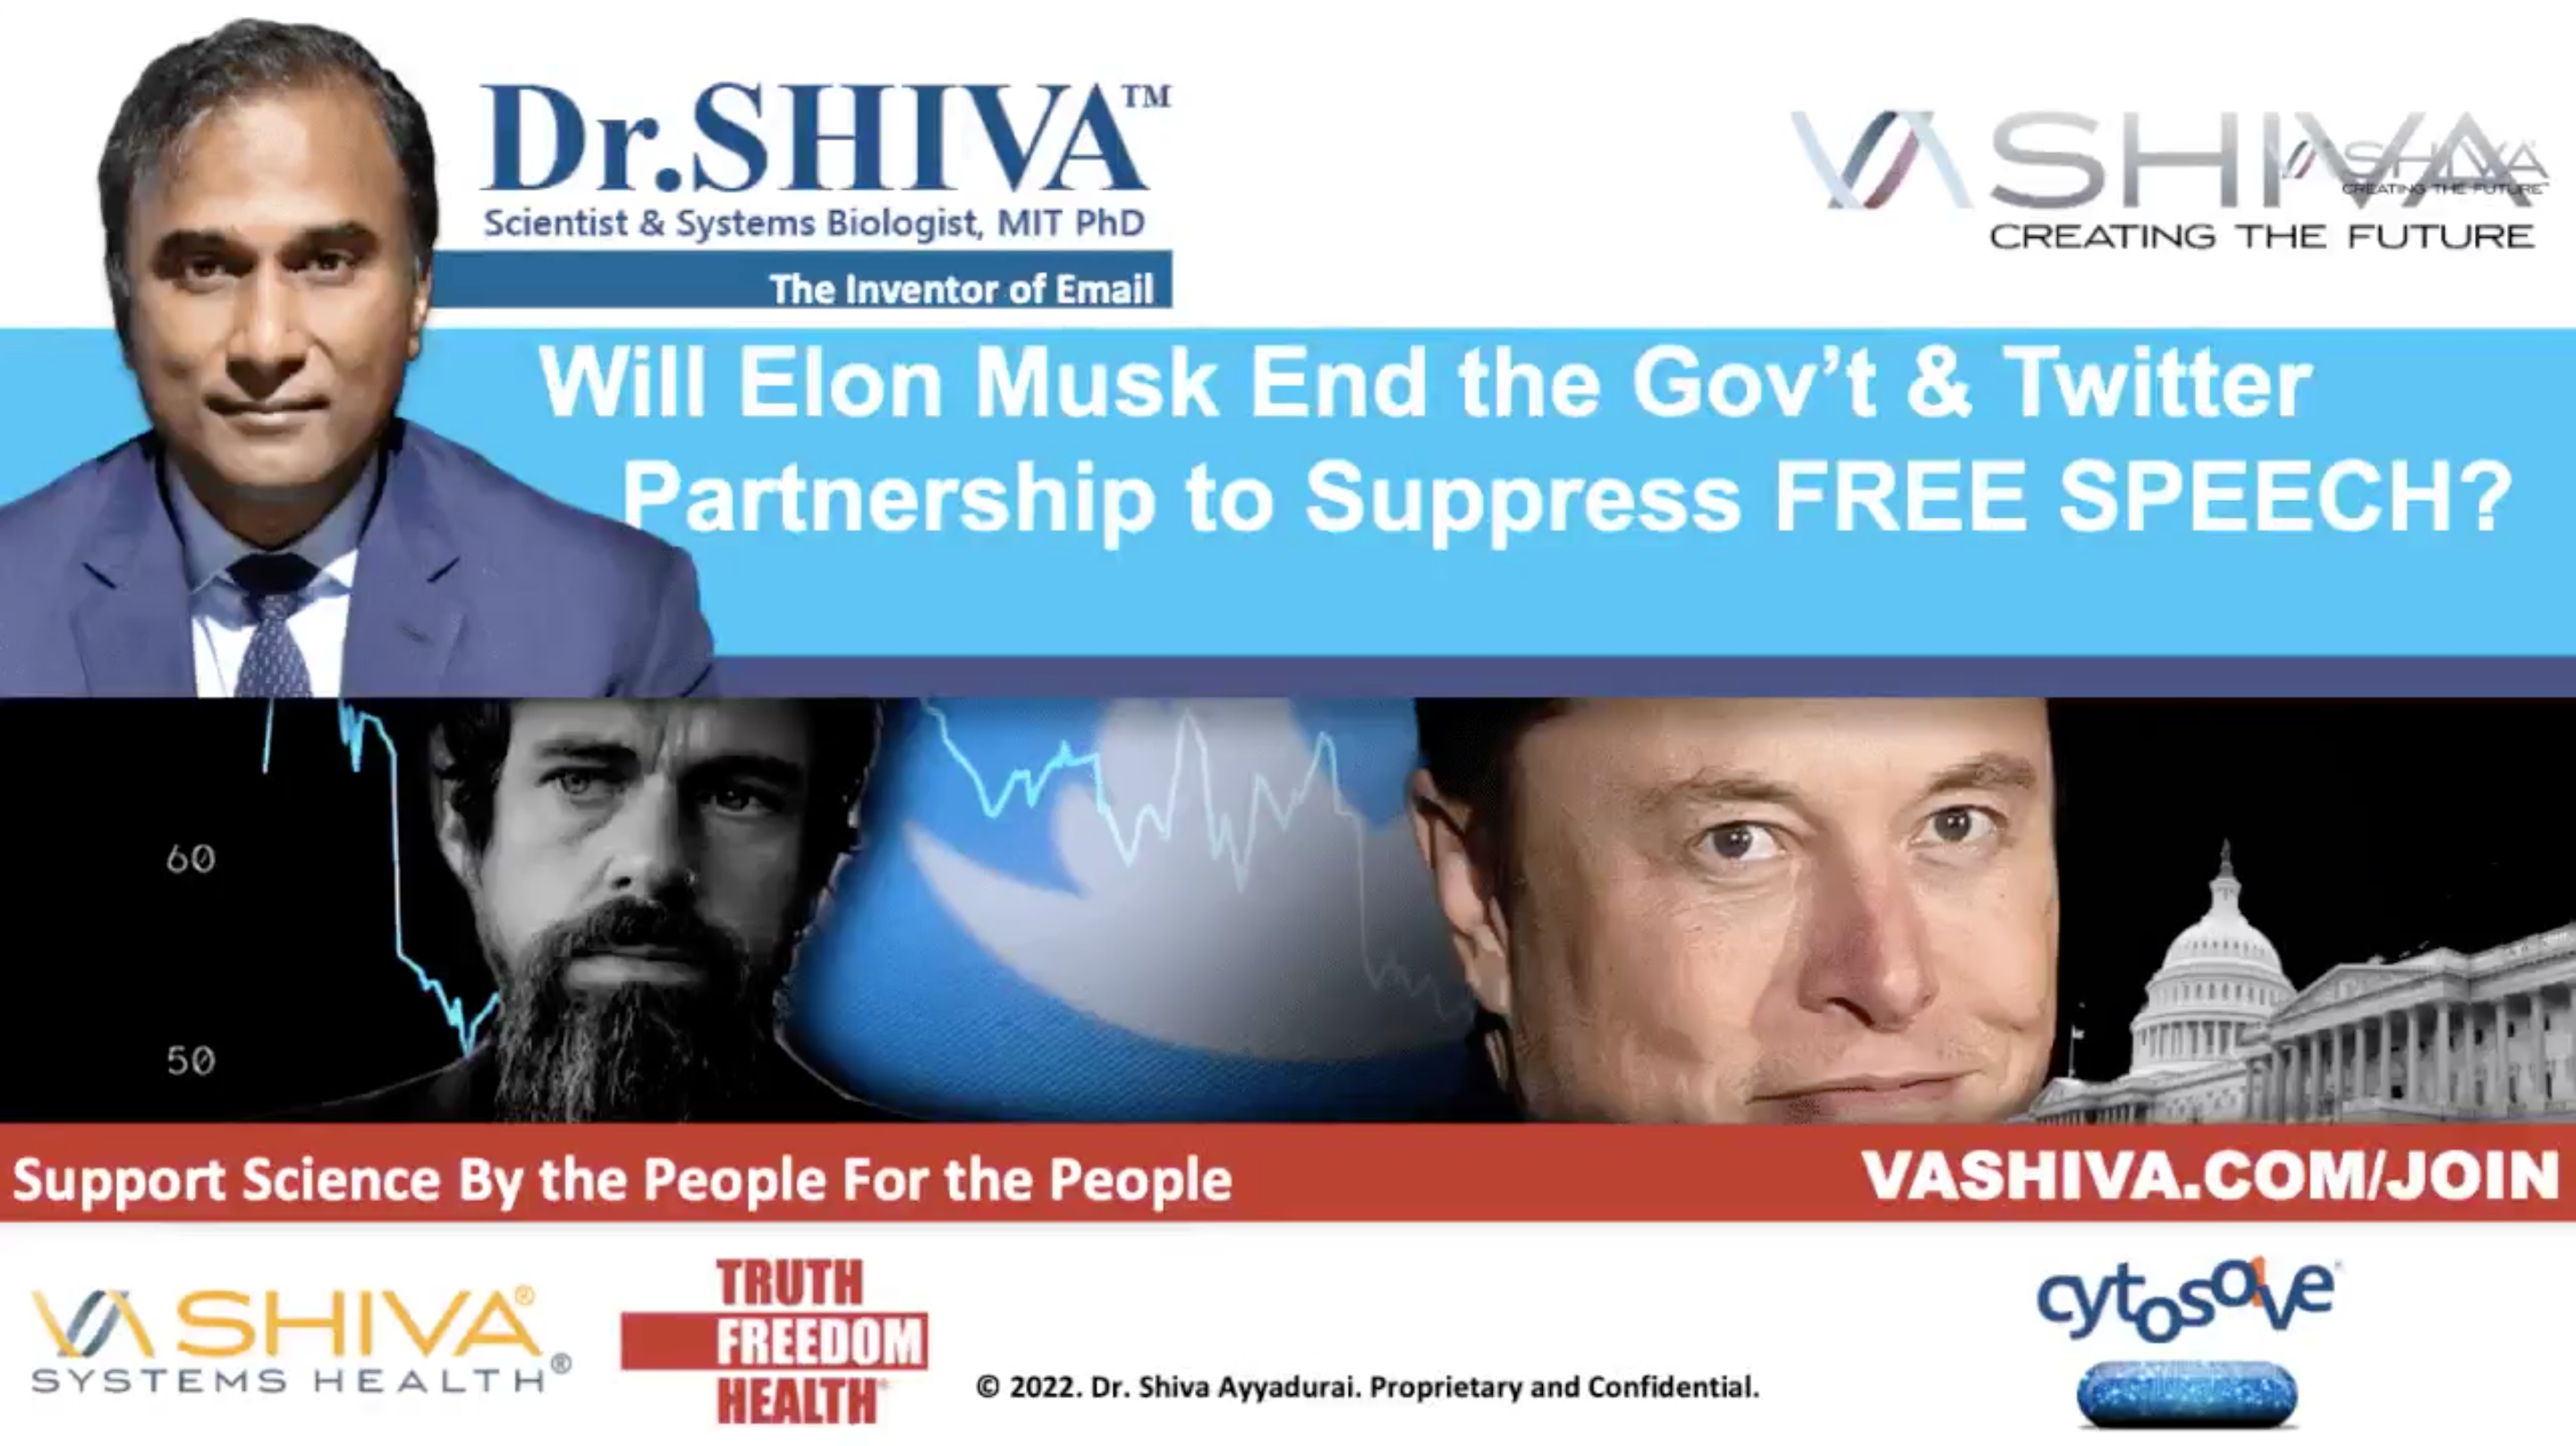 Dr.SHIVA LIVE: Will Elon Musk End the Gov’t & Twitter Partnership to Suppress FREE SPEECH?